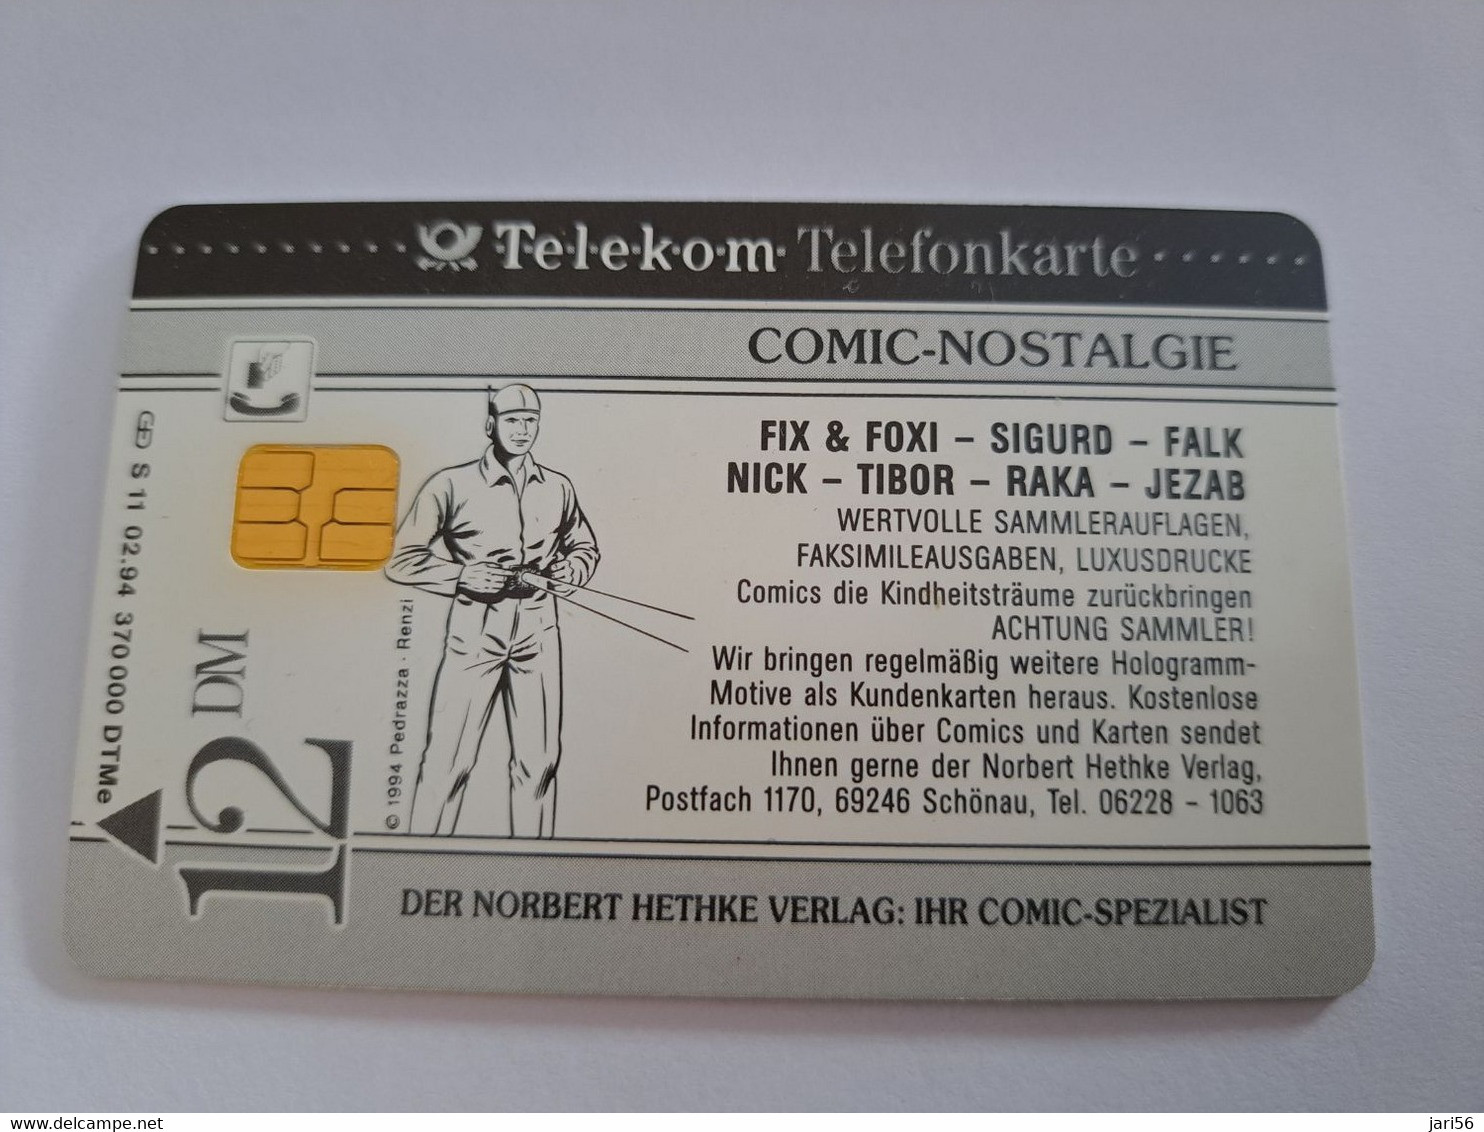 DUITSLAND/ GERMANY  CHIPCARD /COMIC/MARVEL SUPERHEROES /FULGOR  / 12DM / 3D SILVER  CARD / S11 MINT  CARD     **10651** - S-Series: Schalterserie Mit Fremdfirmenreklame